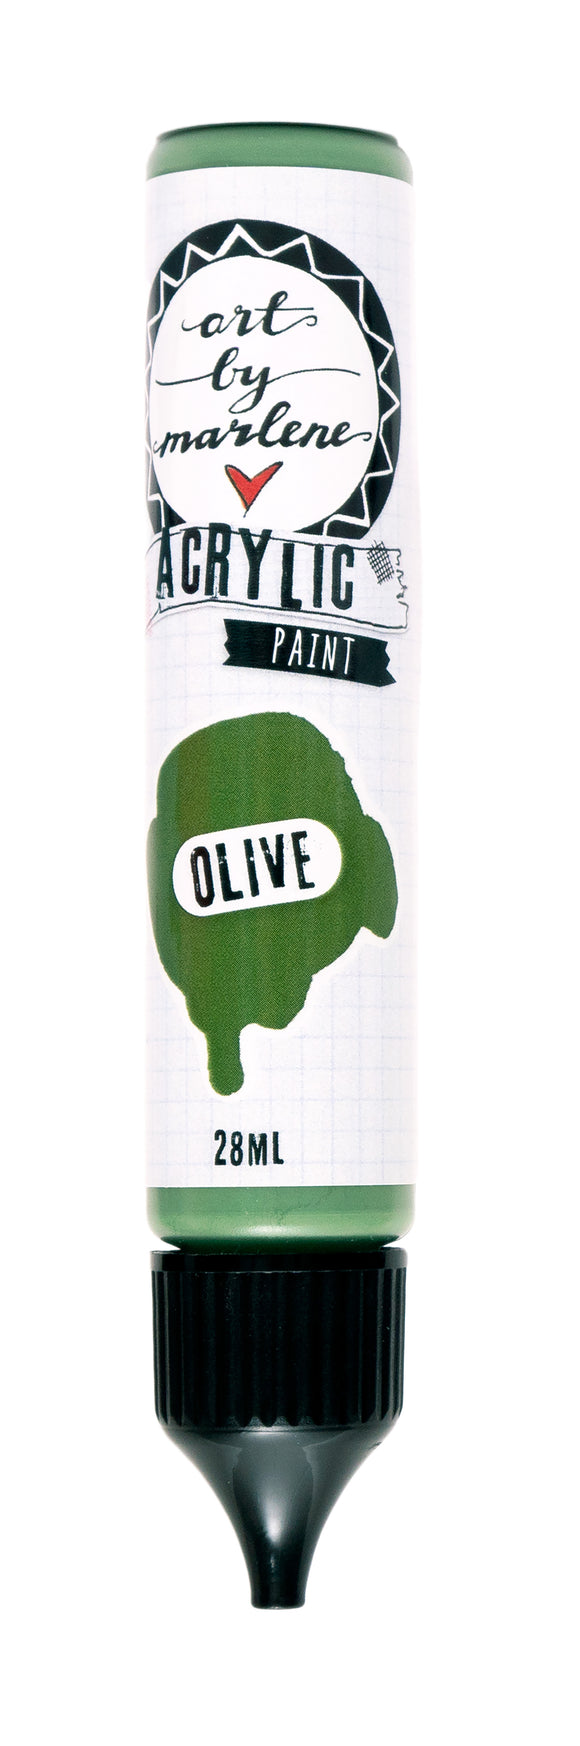 Acrylic Paint - Olive : (ABM) ACP27